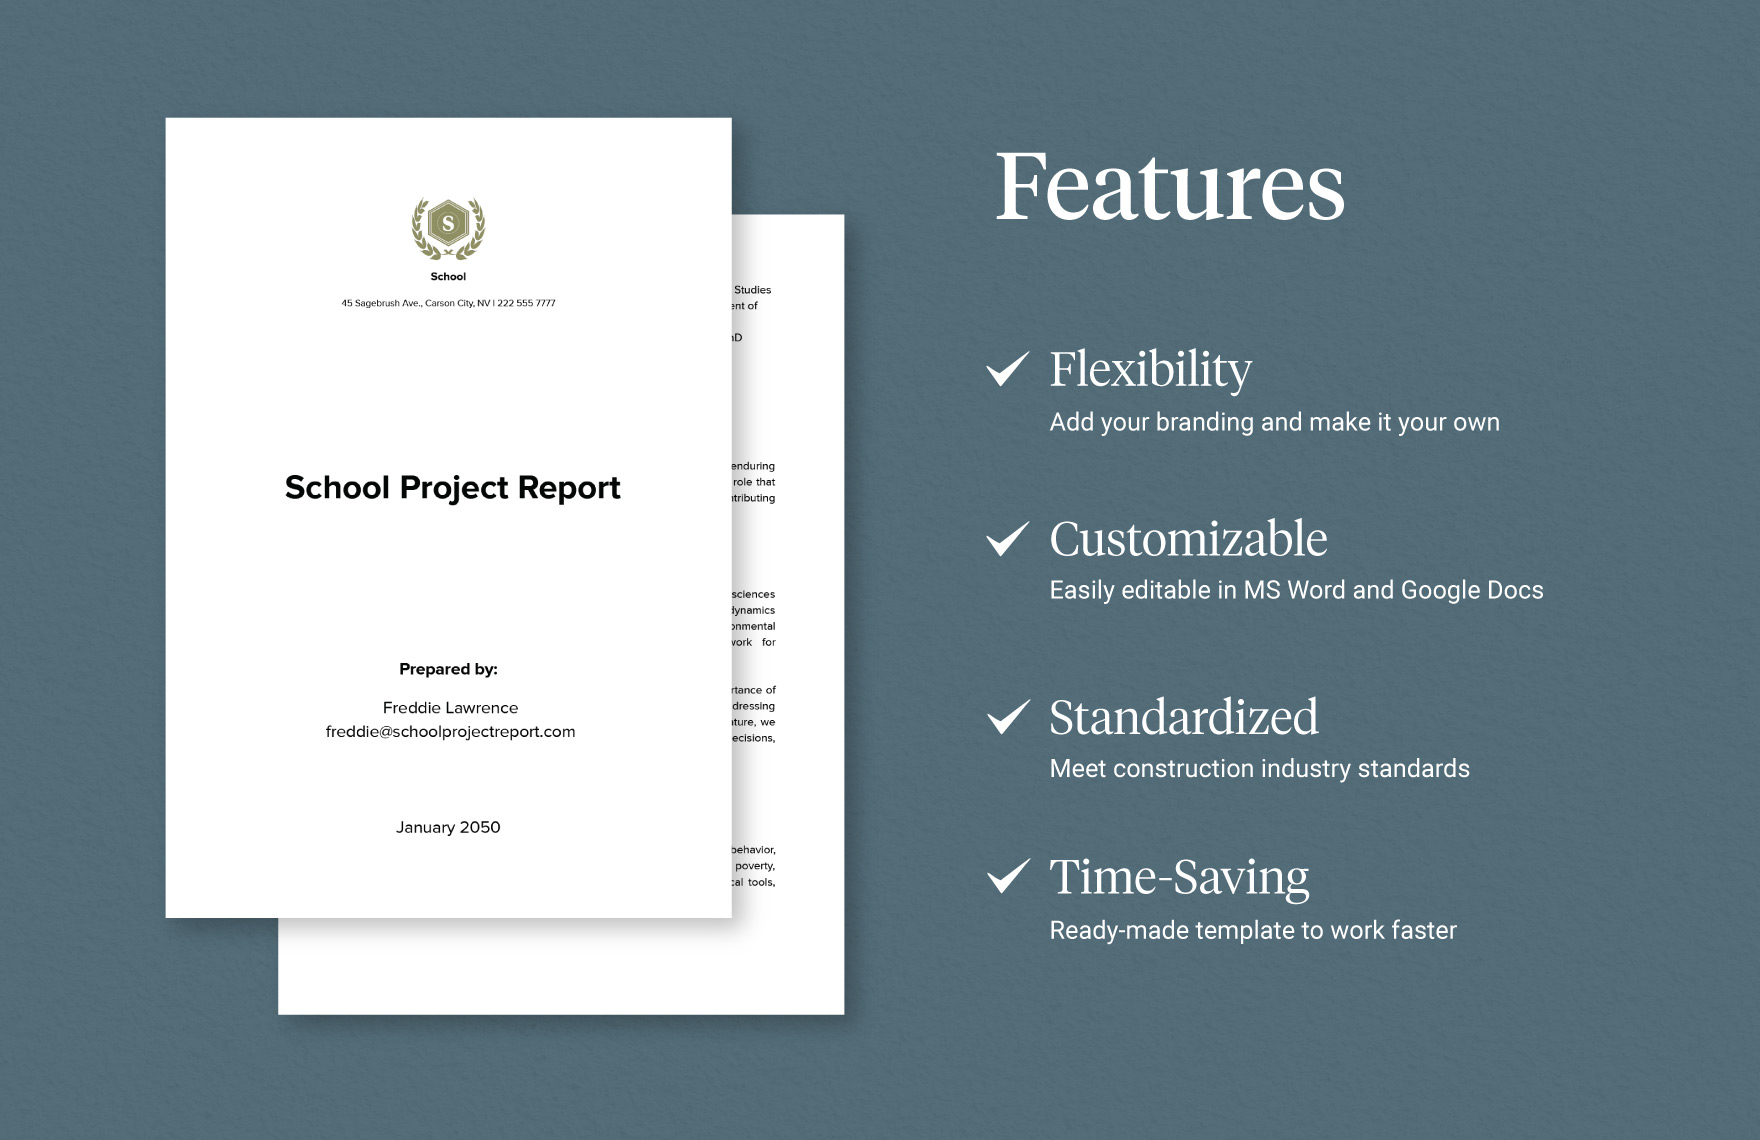 School Project Report Template